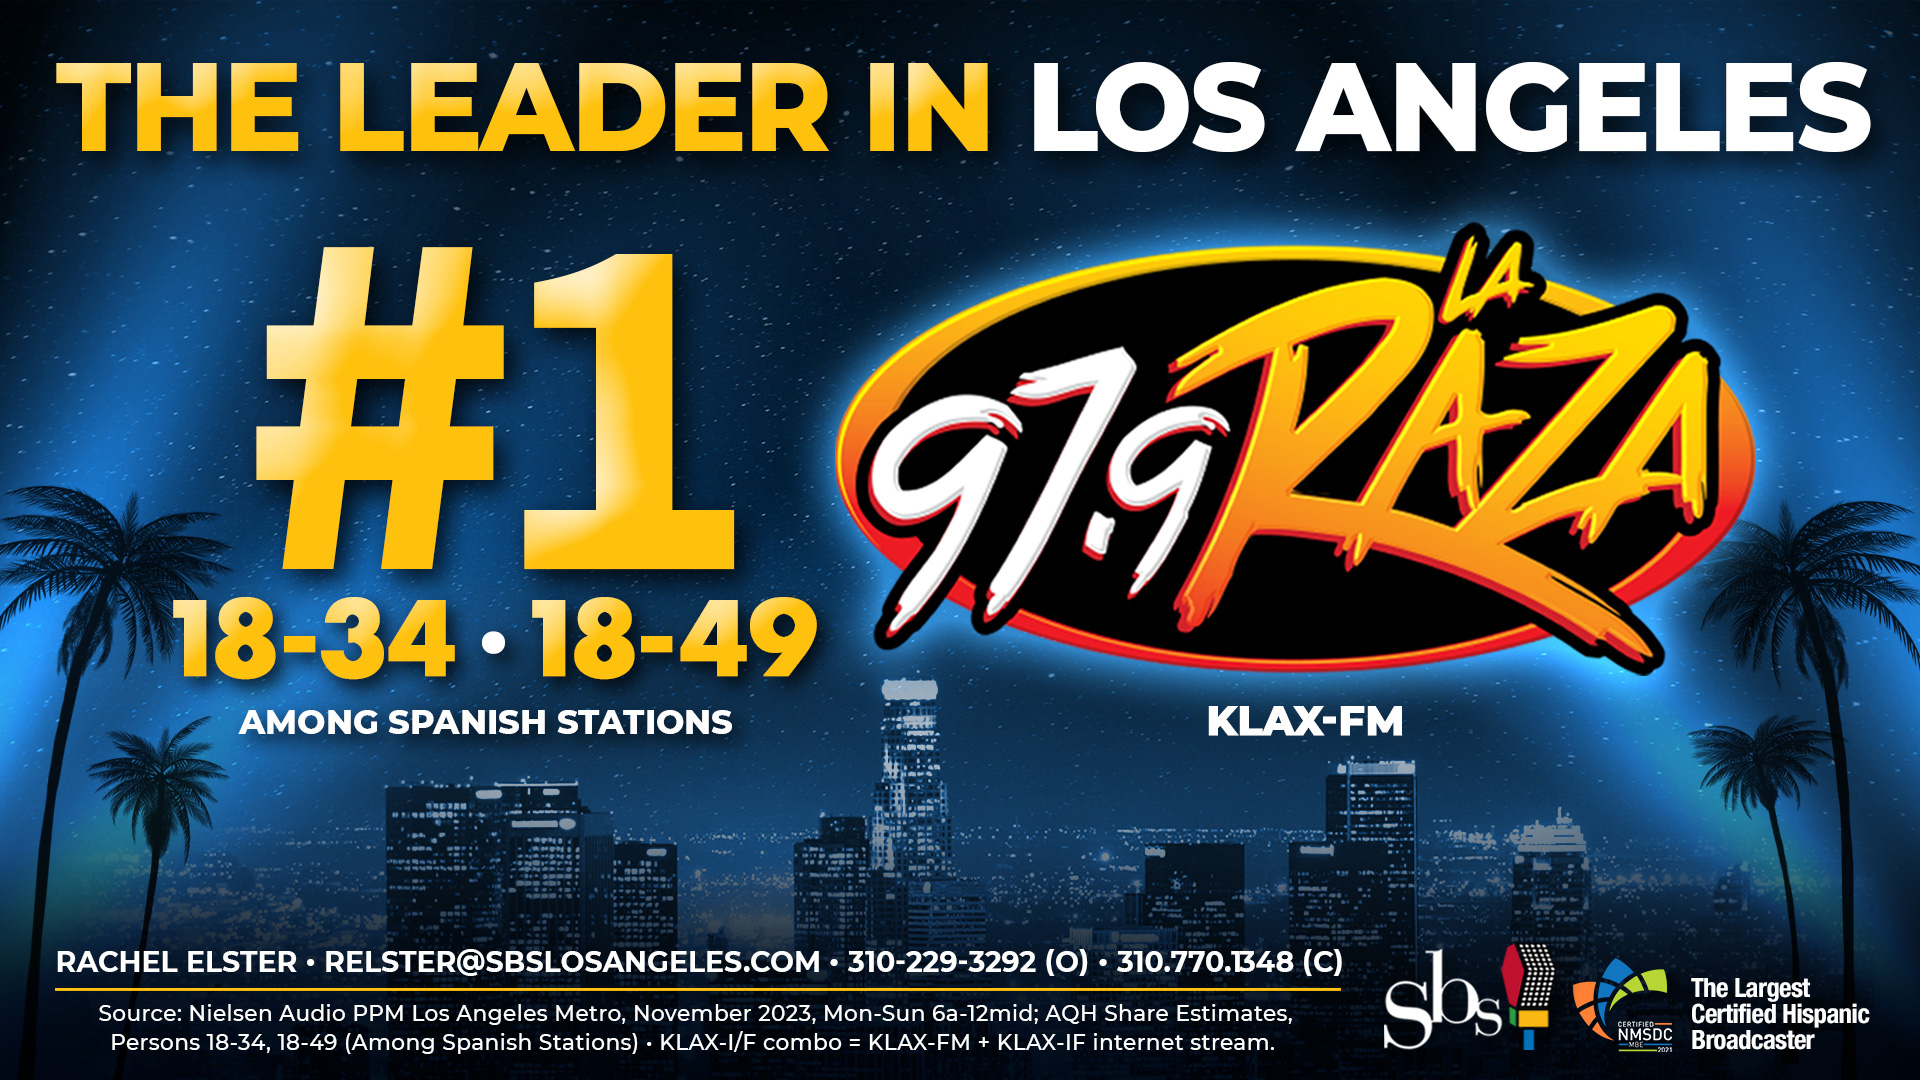 KLAX - The Leader in Los Angeles!